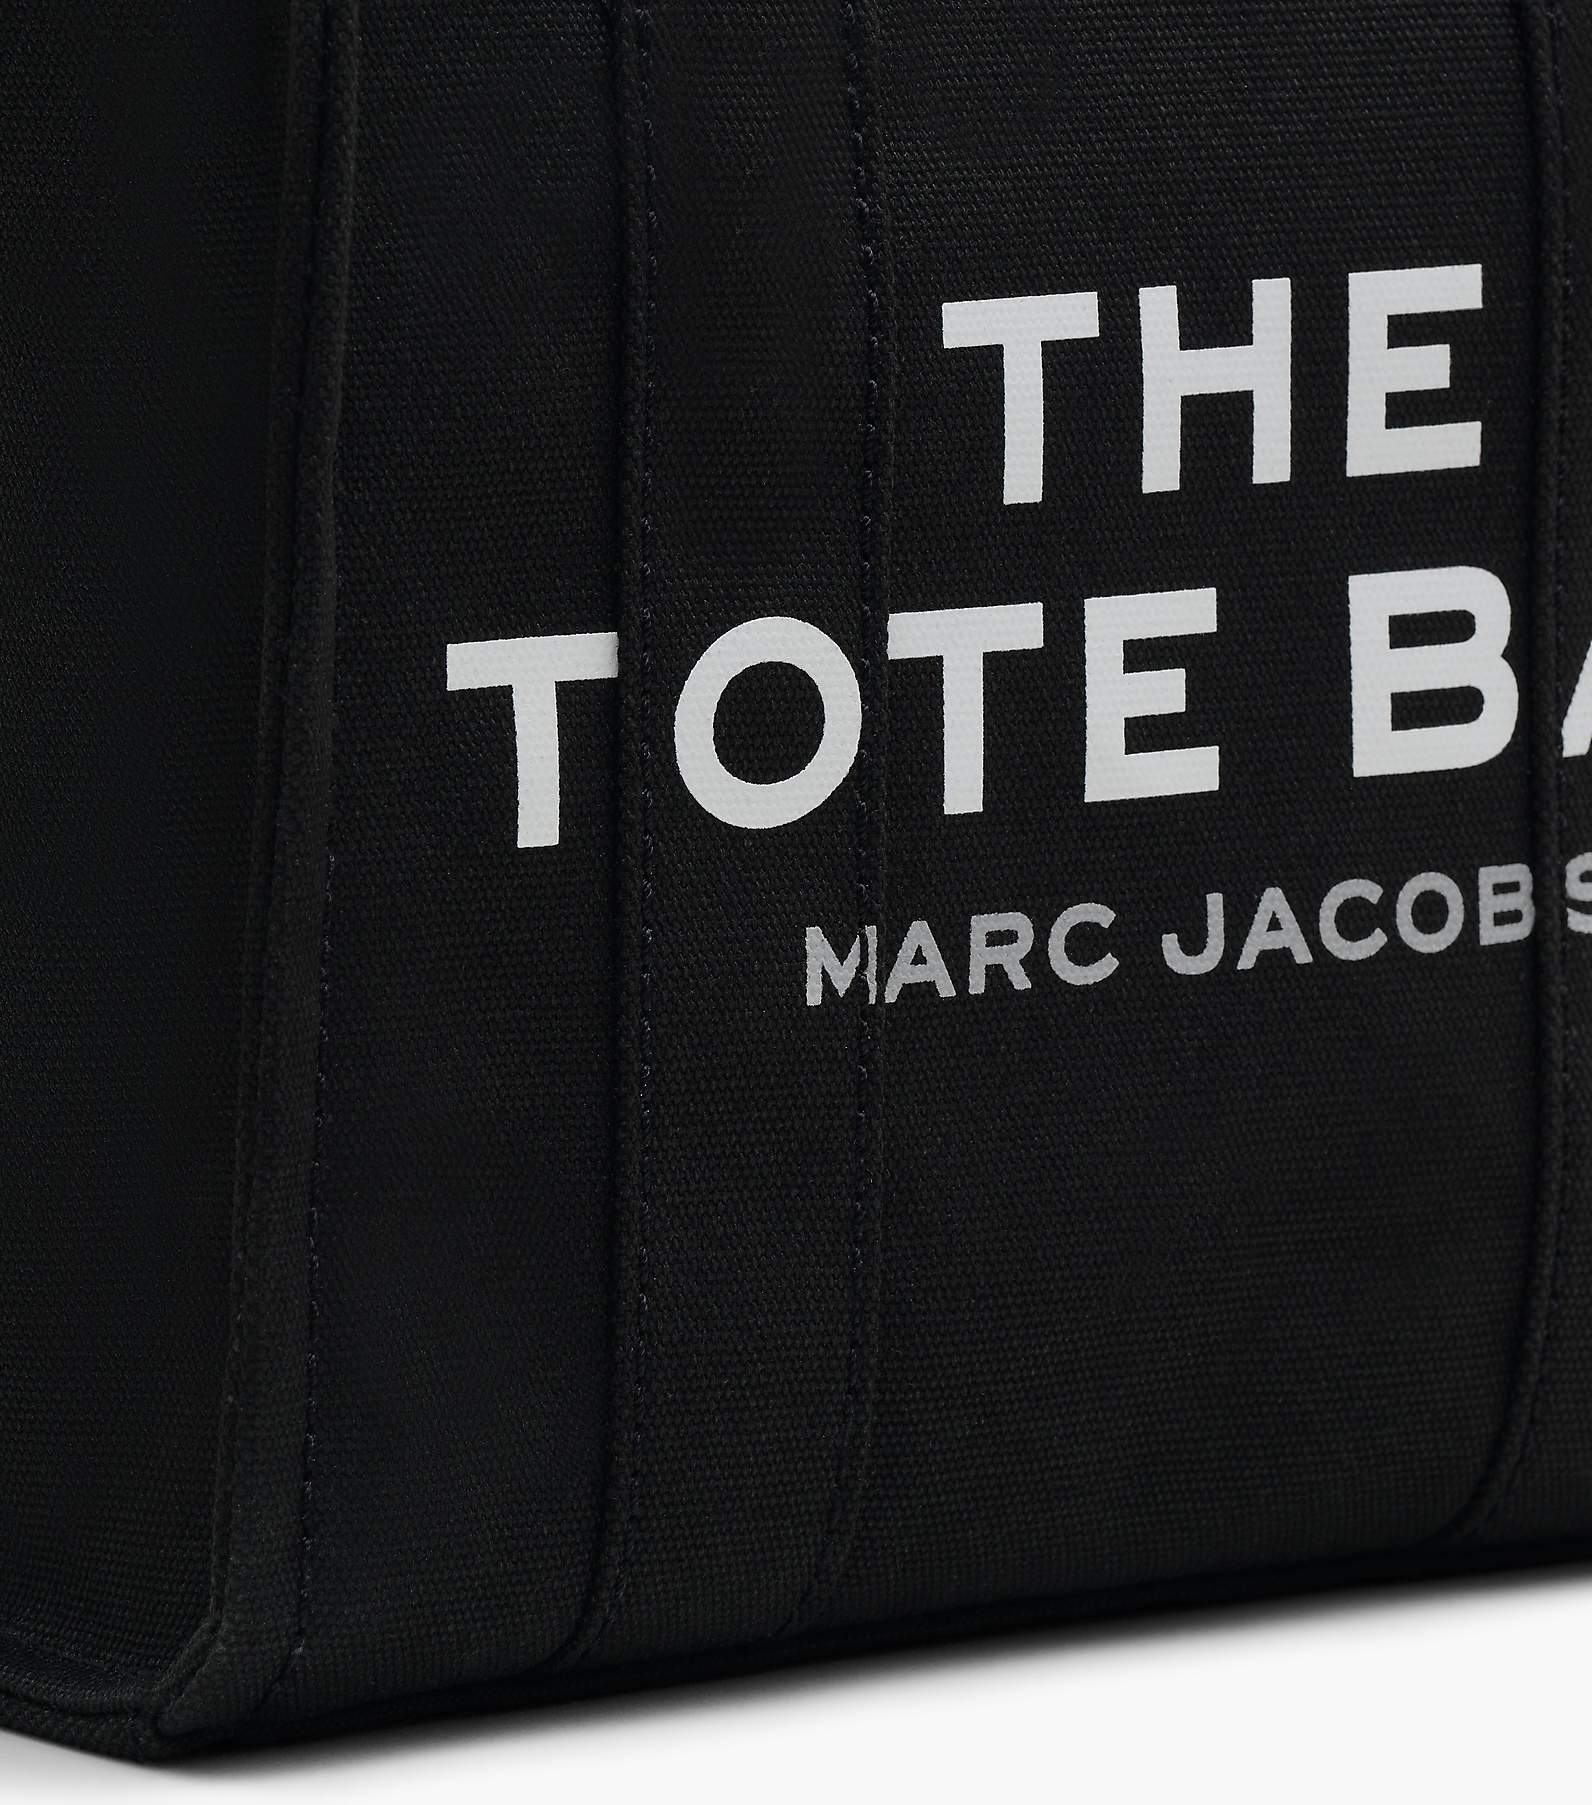 MARC JACOBS Tote Bag Mini 2 Way Bag Black